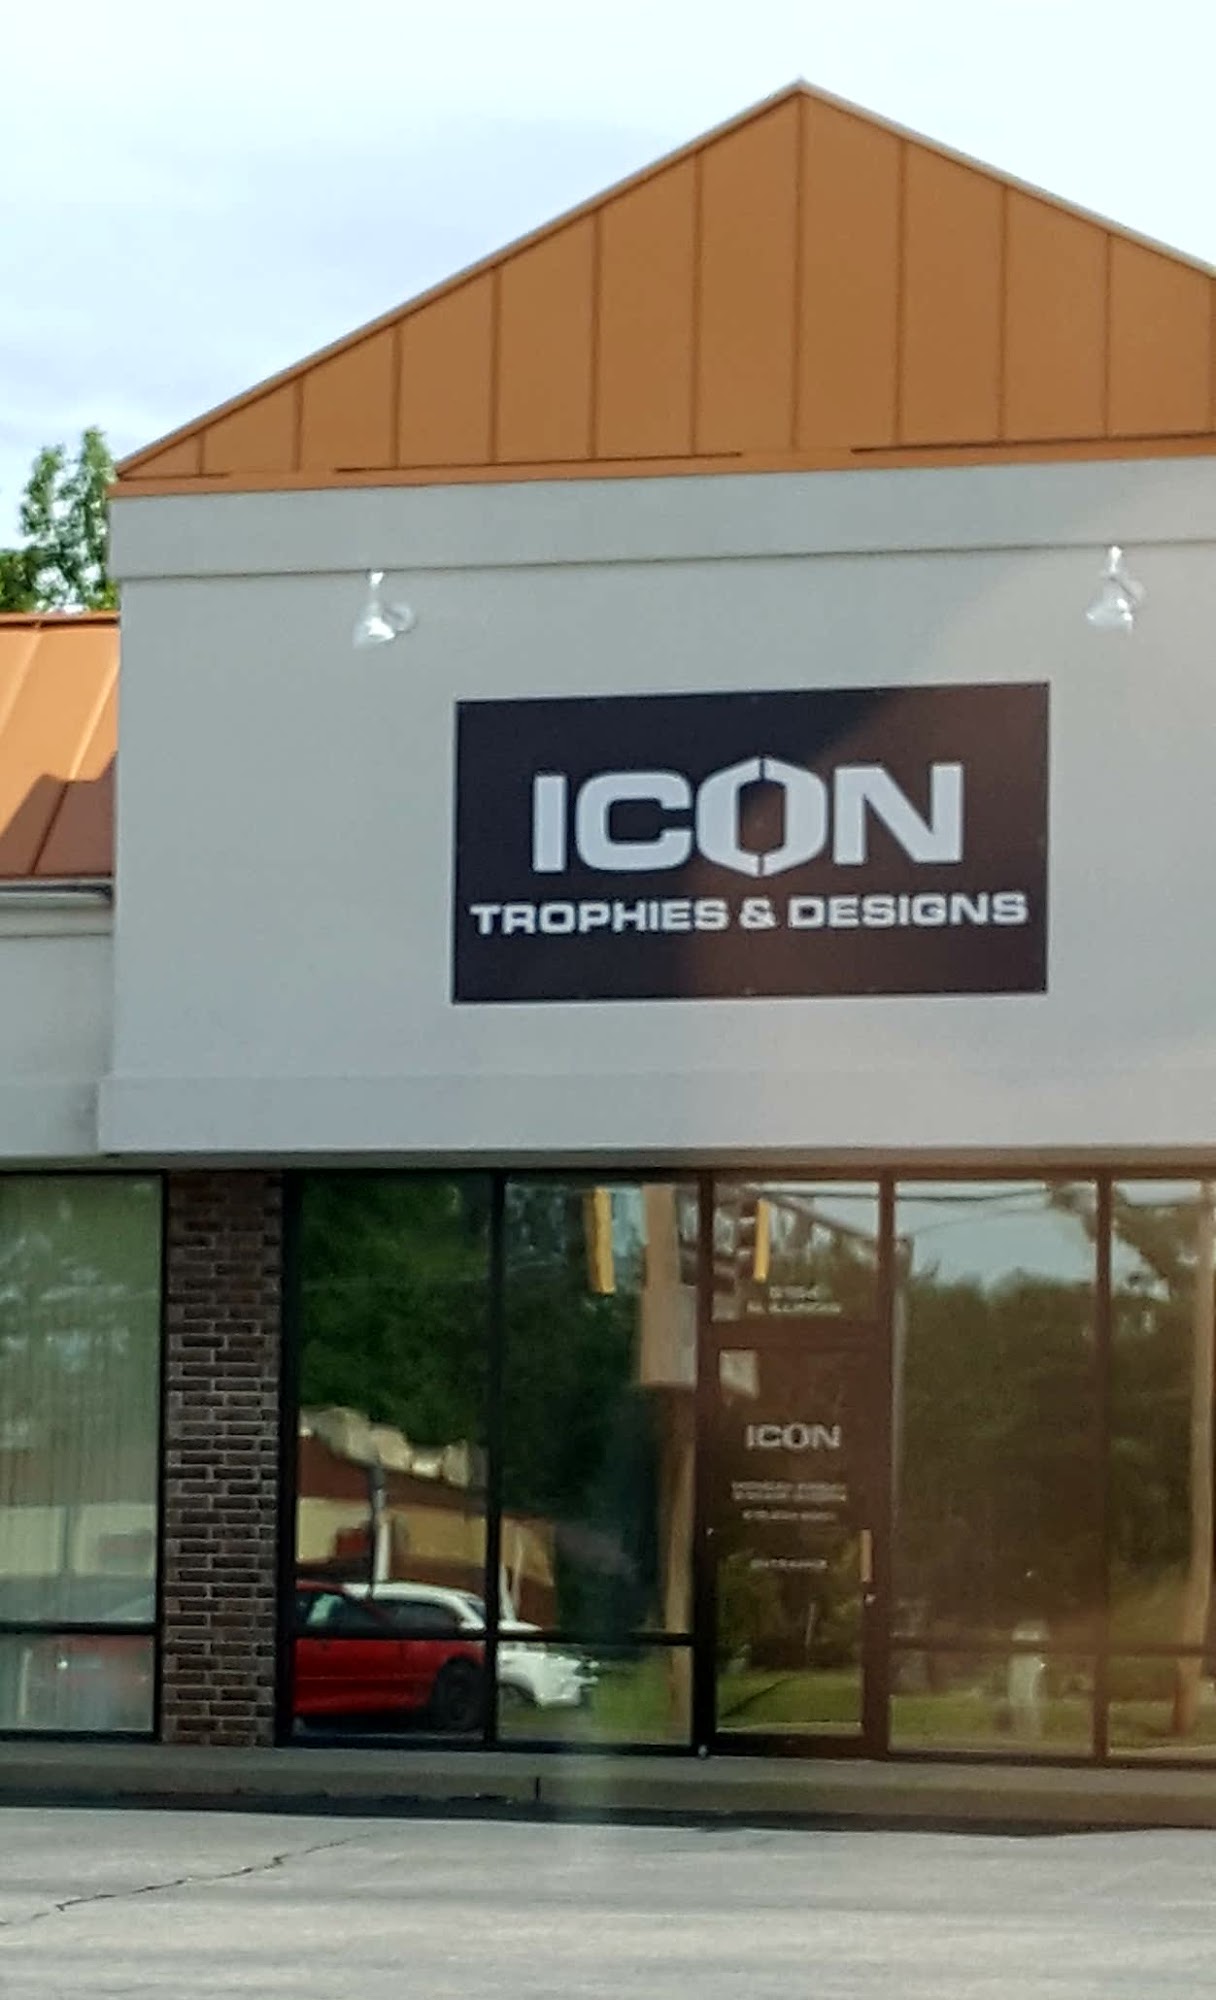 ICON Trophies & Designs